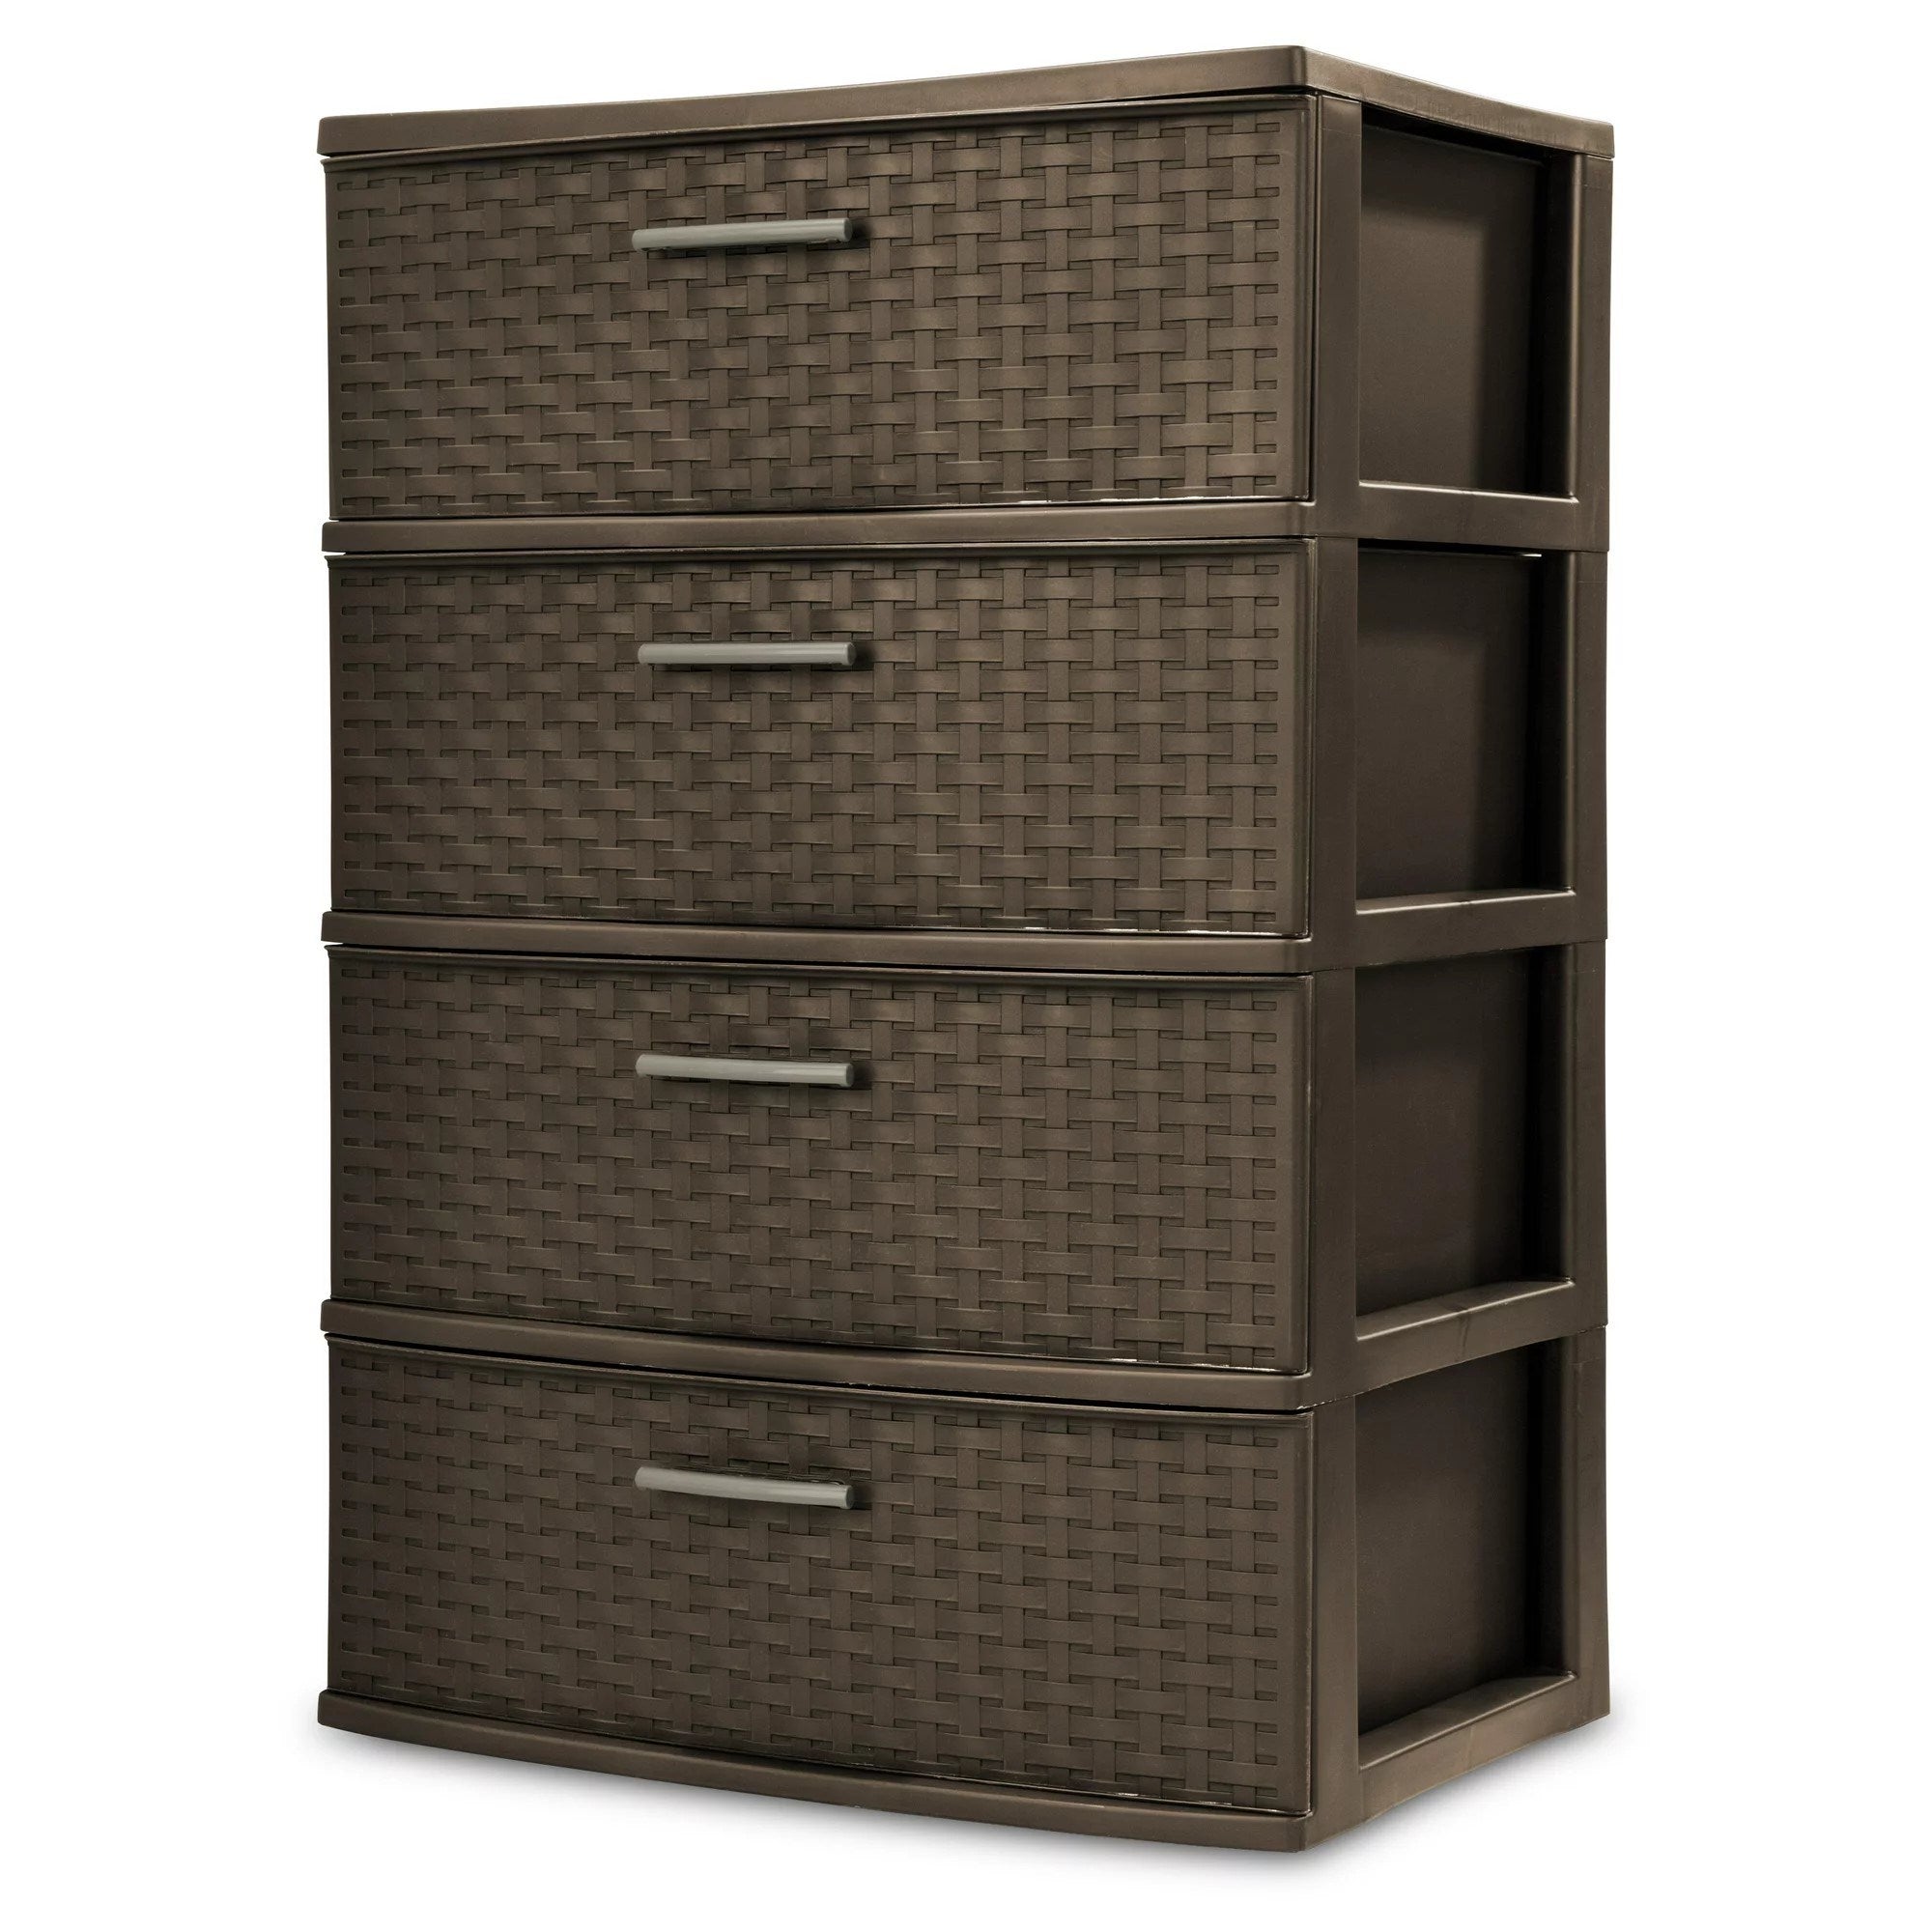 4 Drawer Wide Weave Tower Decoration Storage Cabinet